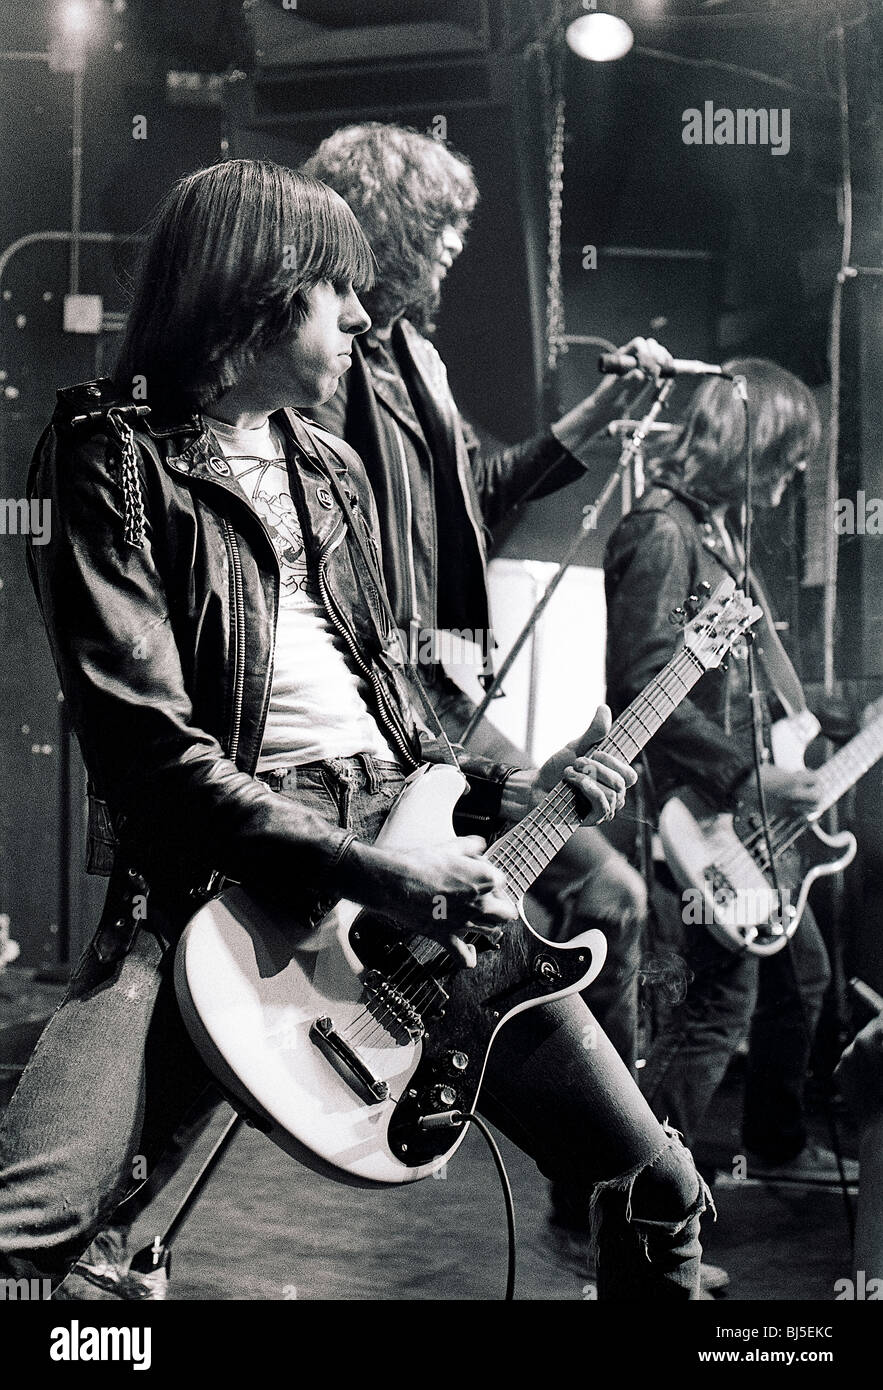 New York, NY, USA - C.B.G.B.'s Nightclub, Interior Scene, with The Ramones, Punk Rock Music Band, 'Johnny Ramone', Guitar, rock'n'roll, punks 1977, Punk Culture 70s, punk rock band Stock Photo